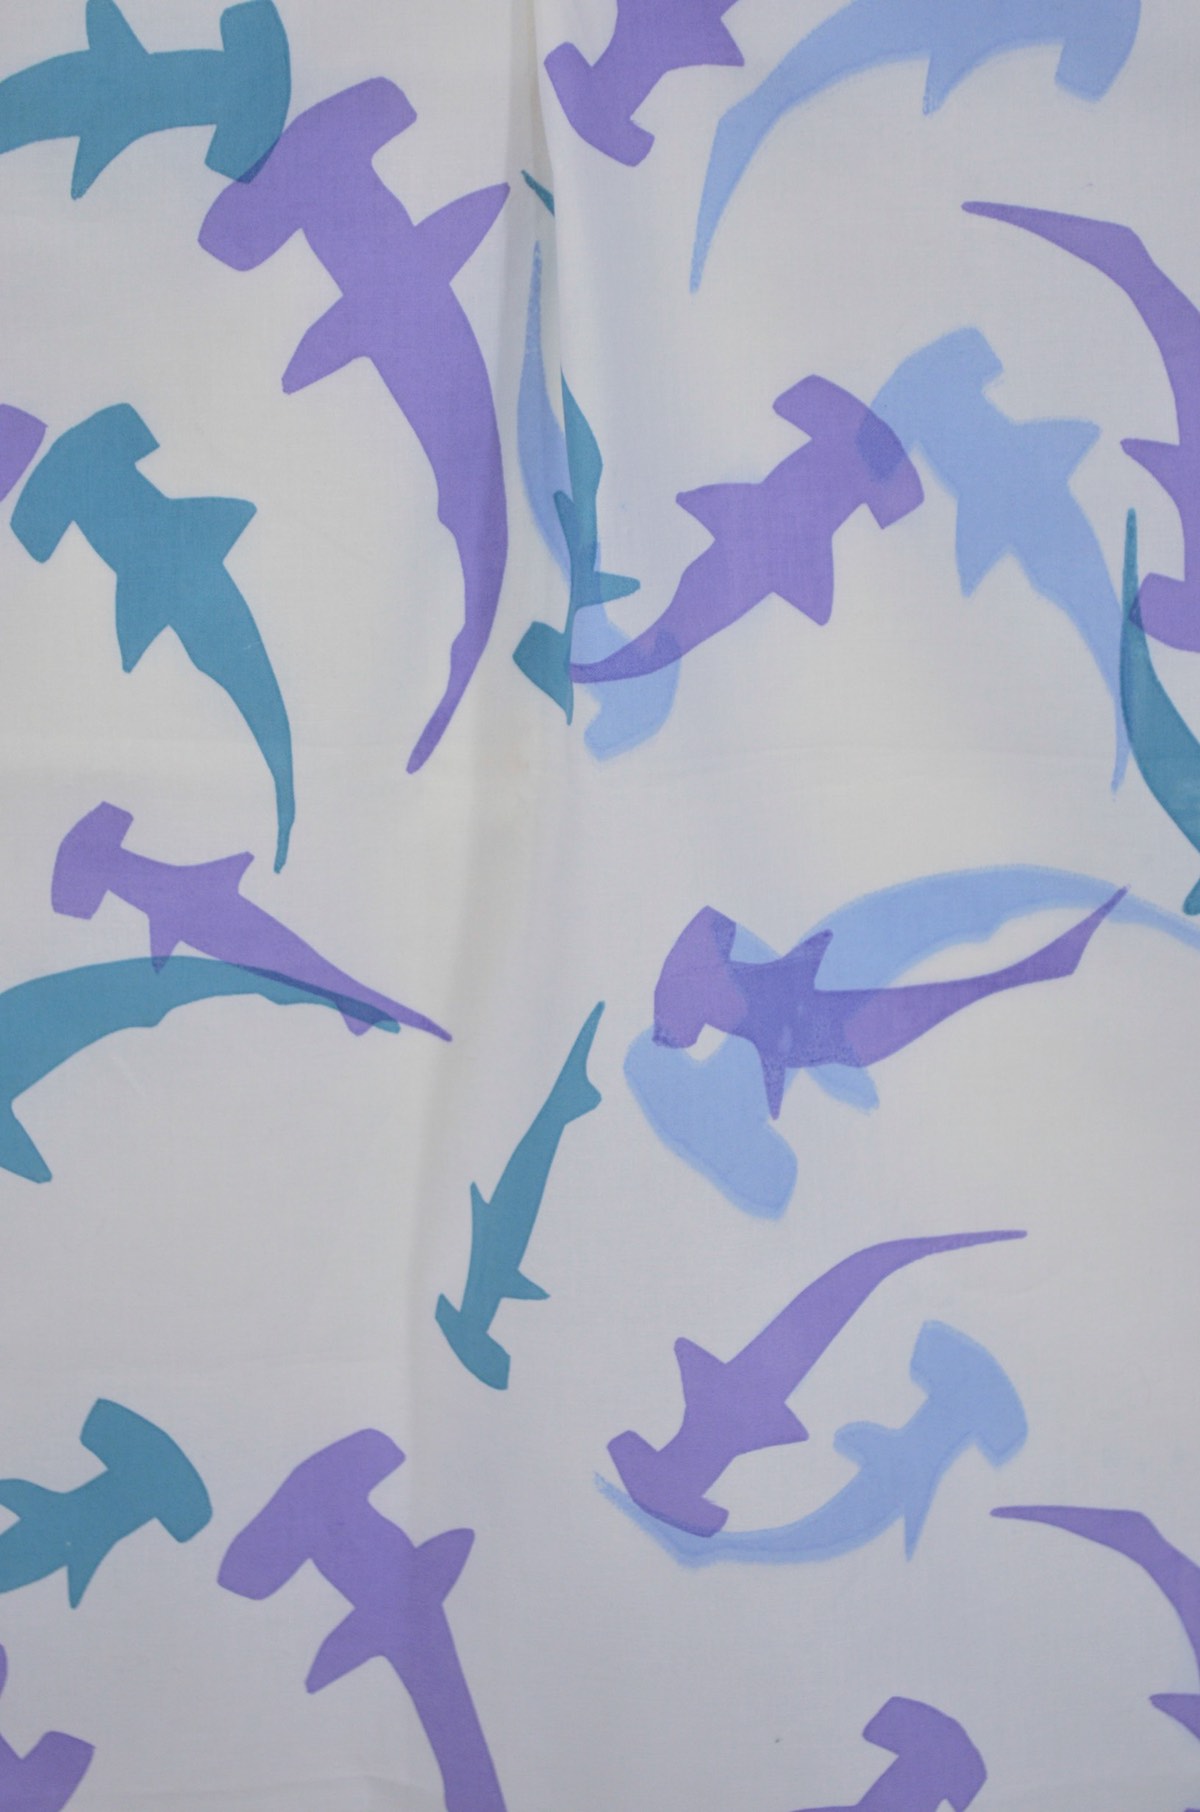 sharks screen print pattern